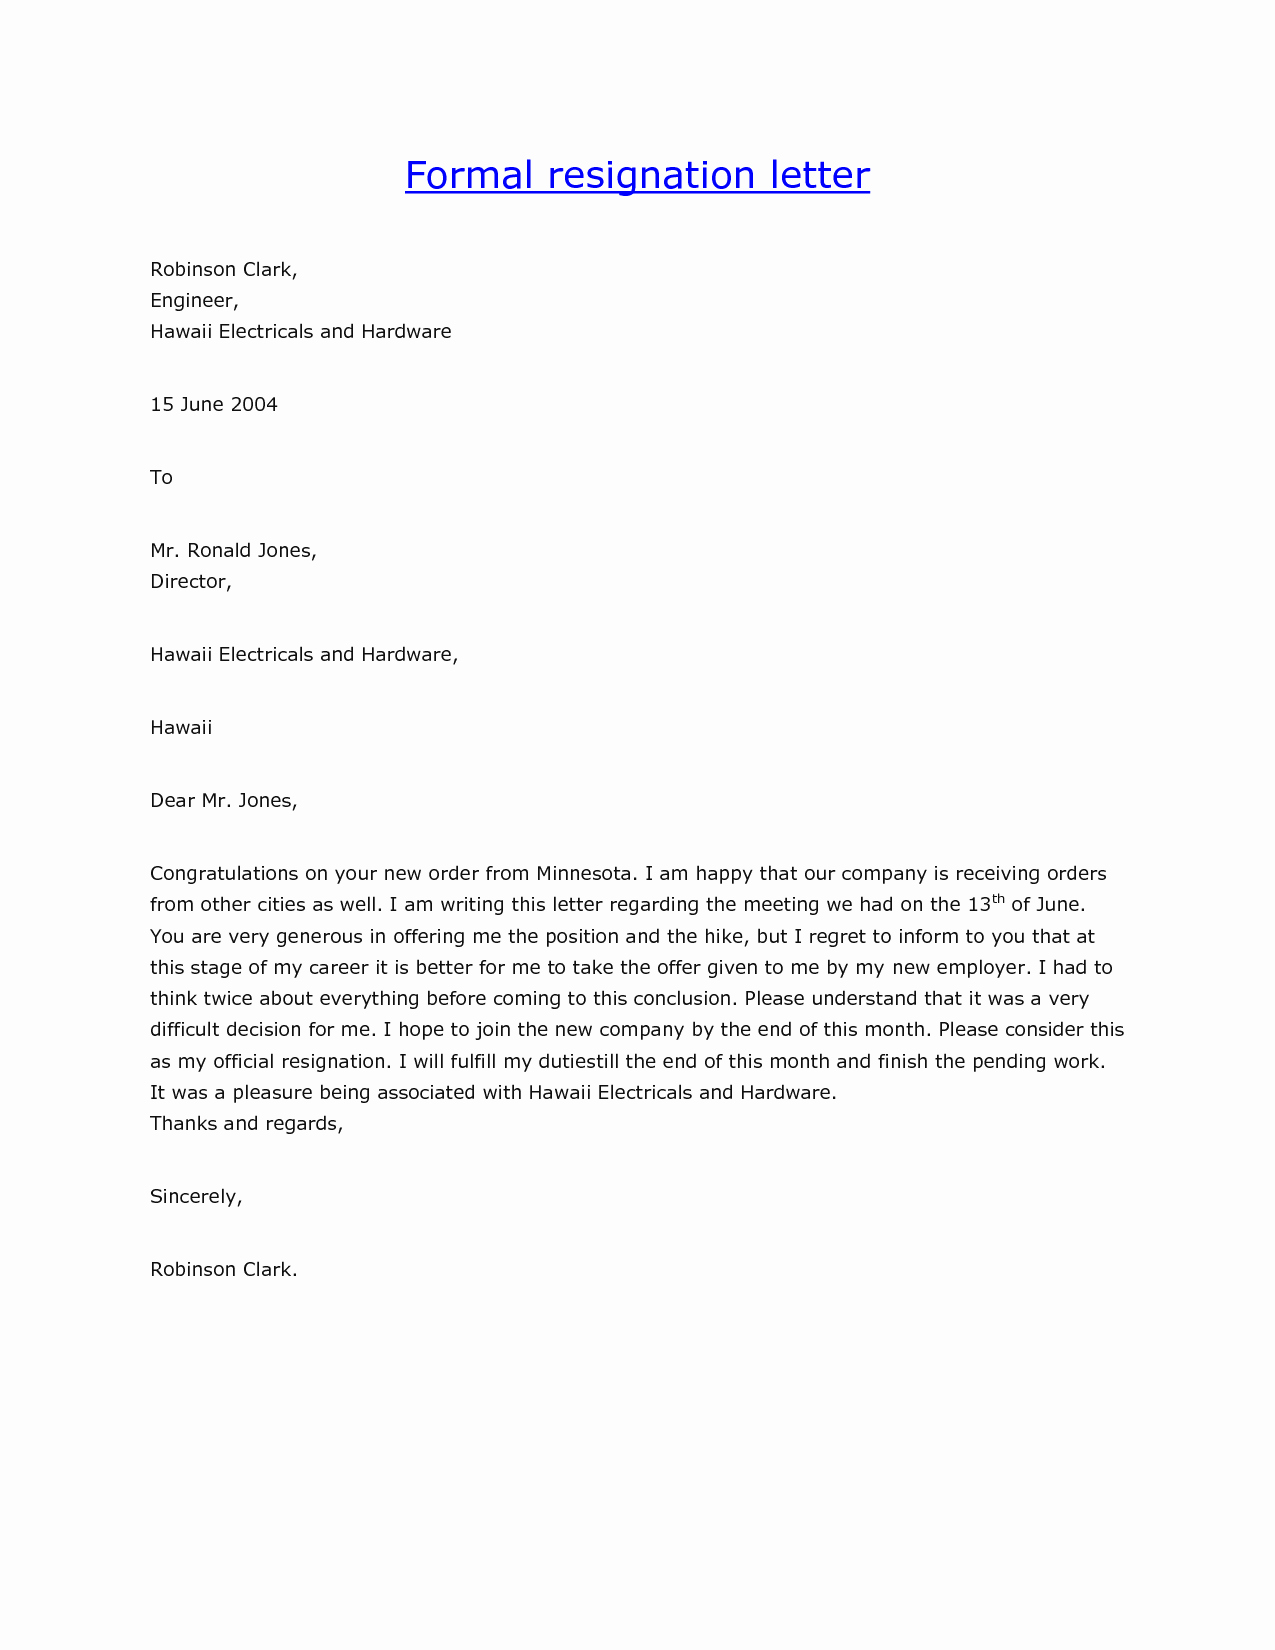 Formal Letter Of Resignation Template